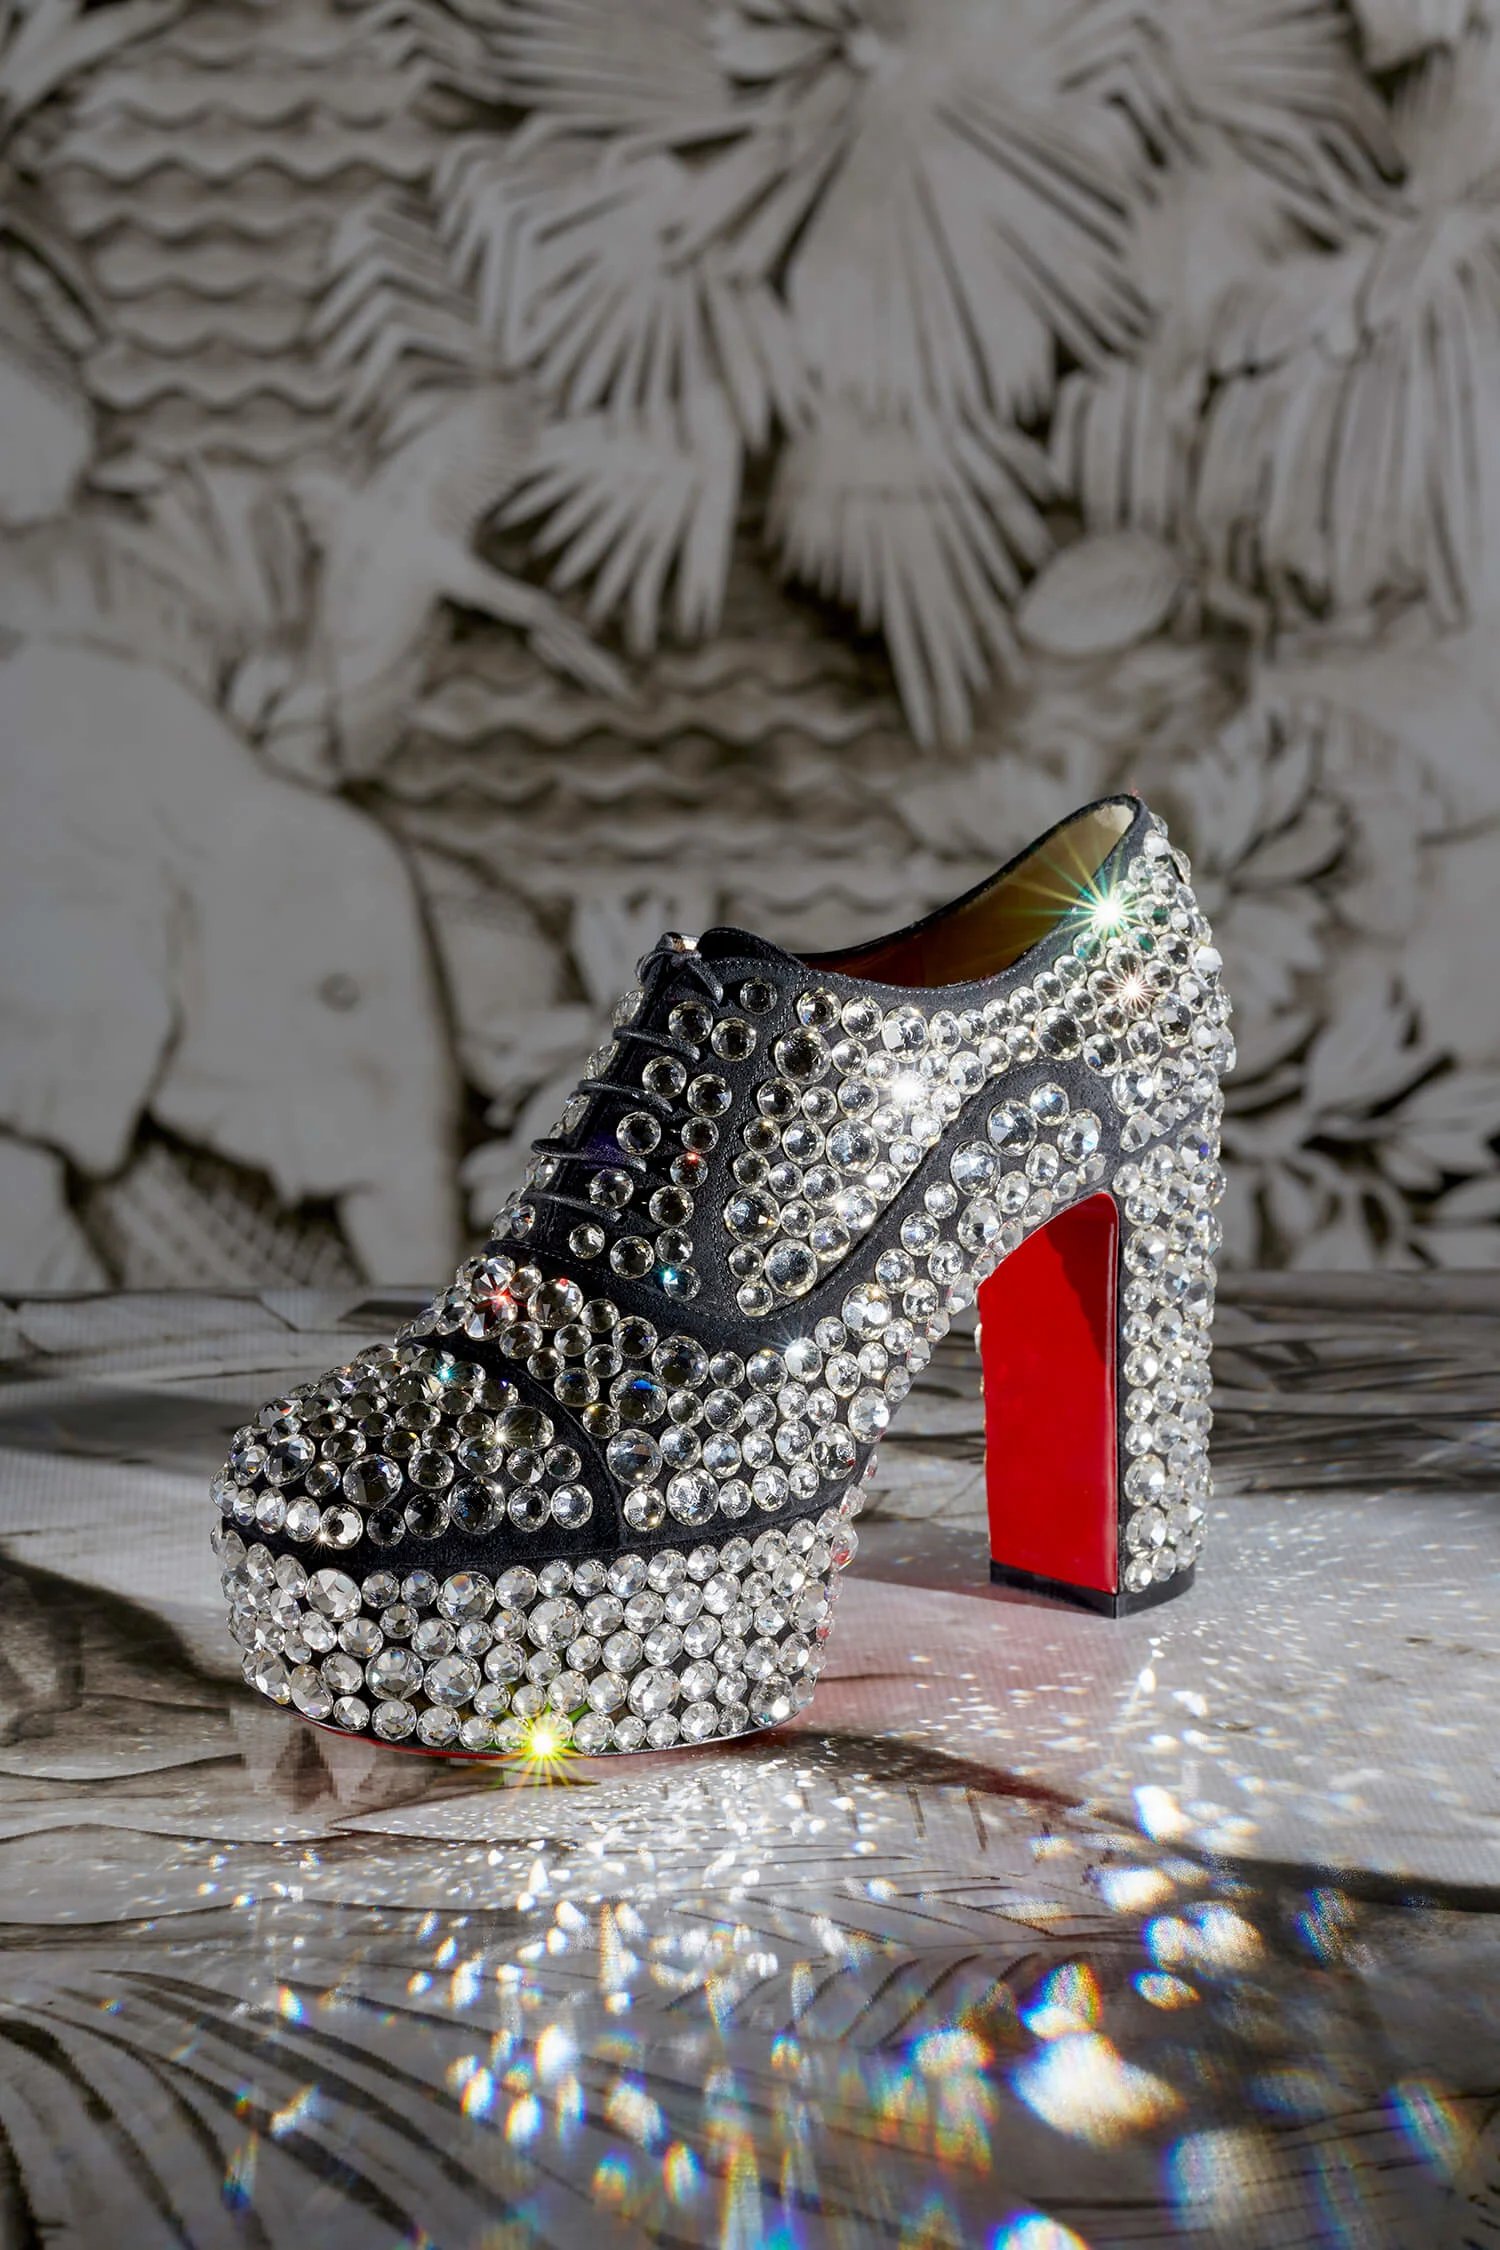 Designer shoes for women - Christian Louboutin